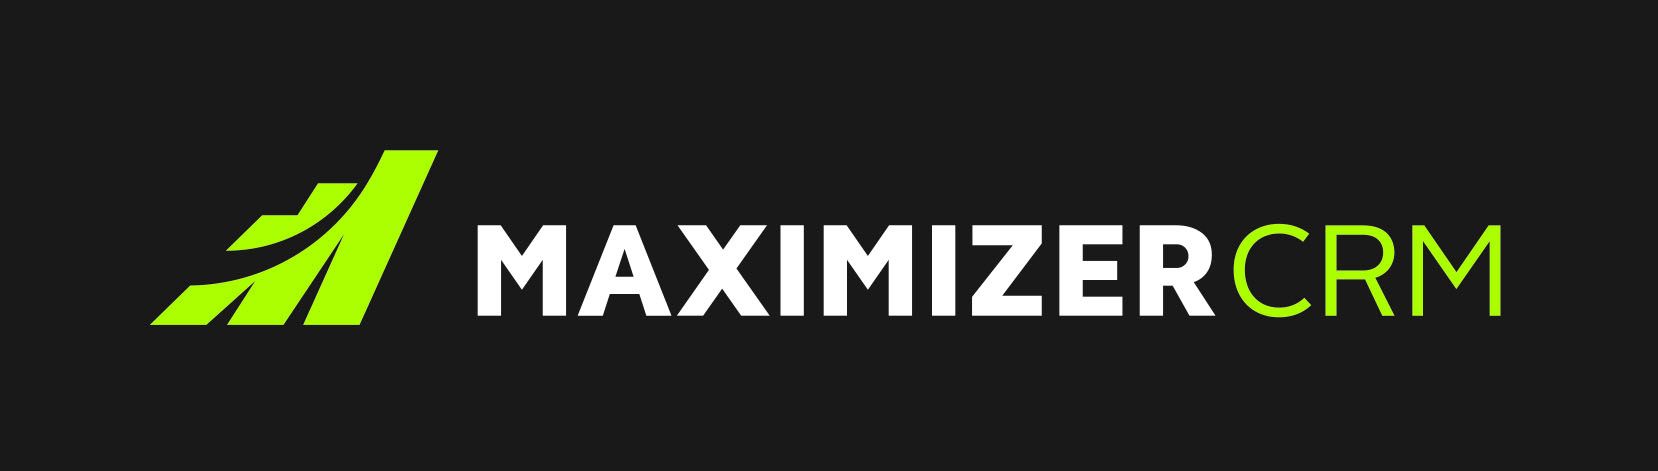 Maximizer CRM logo